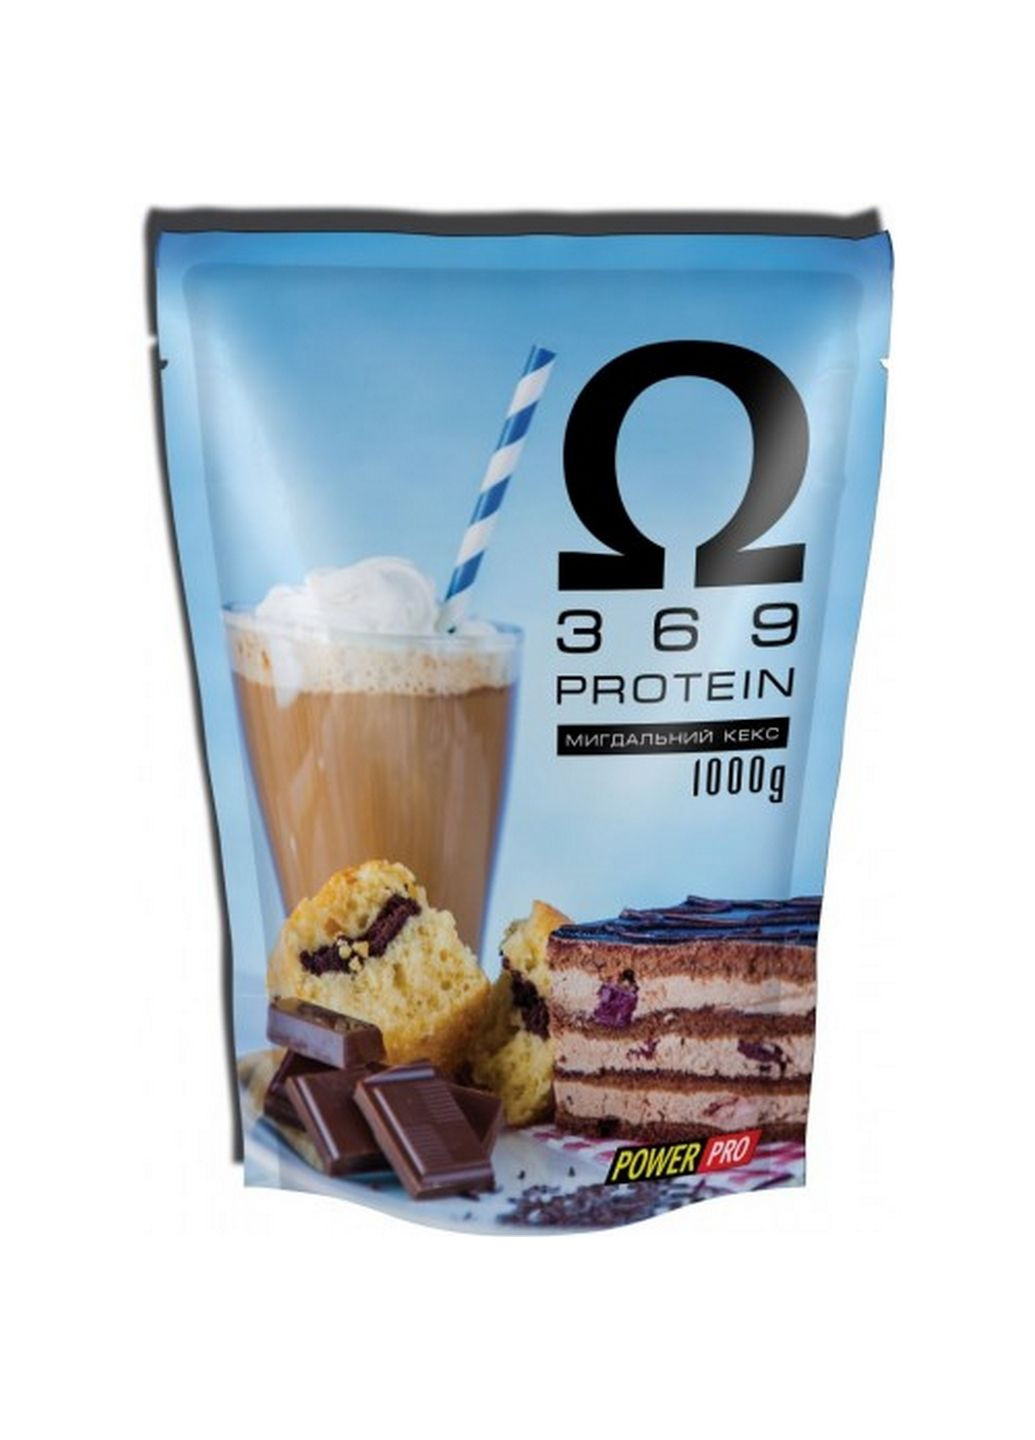 Протеин Omega 3 6 9 Protein, 1 кг - миндальный кекс Power Pro (293342626)